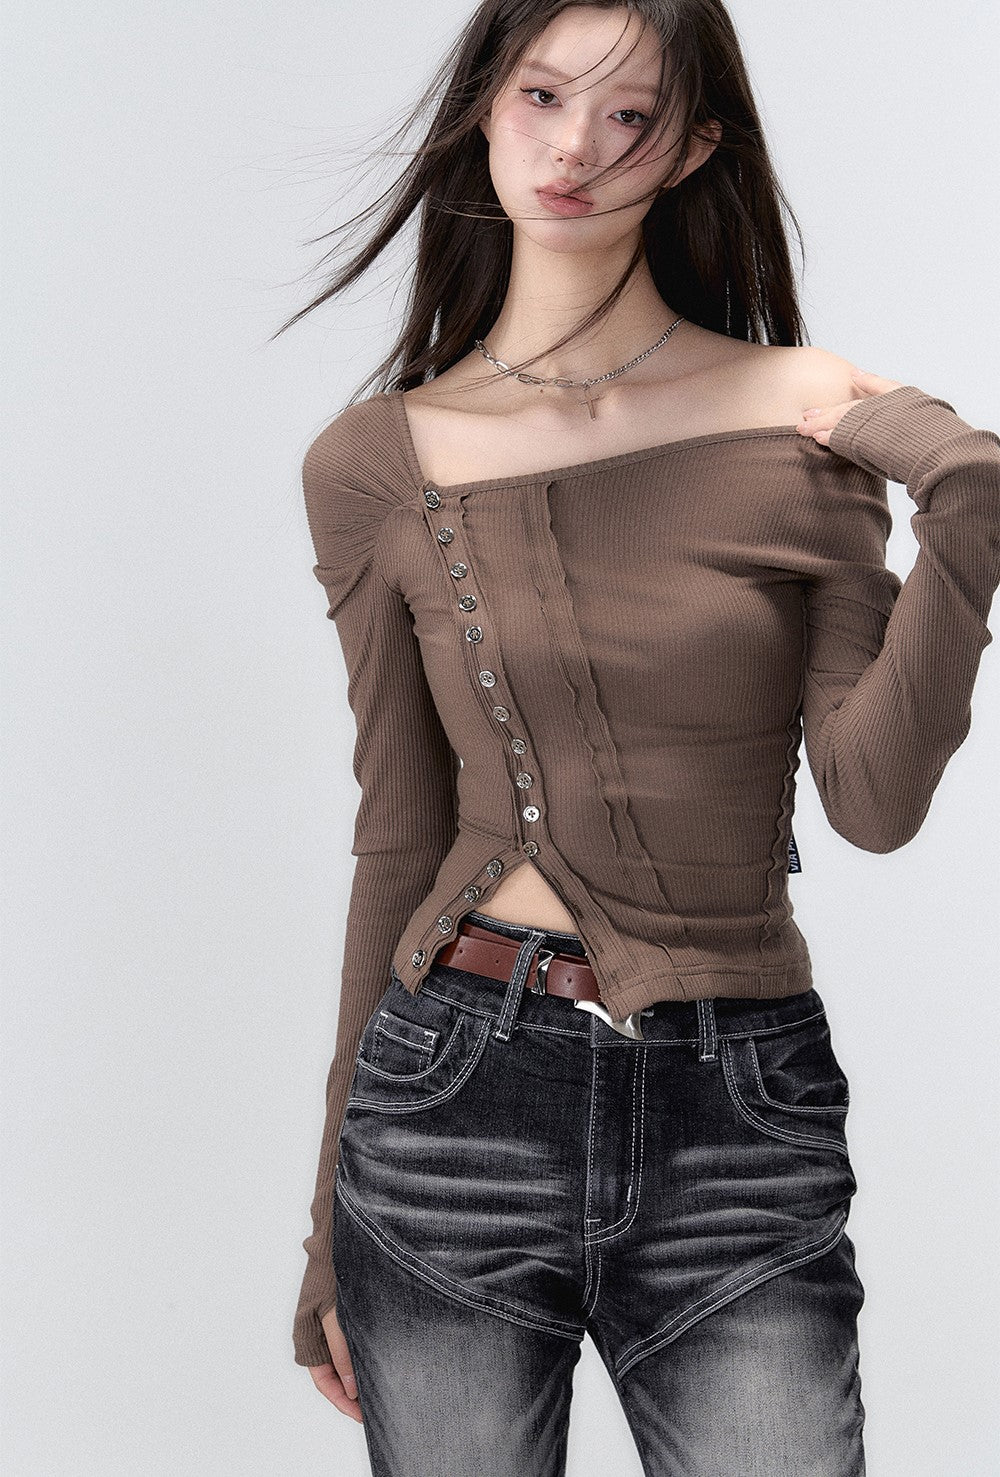 Buttoned Shoulder Splicing Long-sleeved T-shirt VIA0052